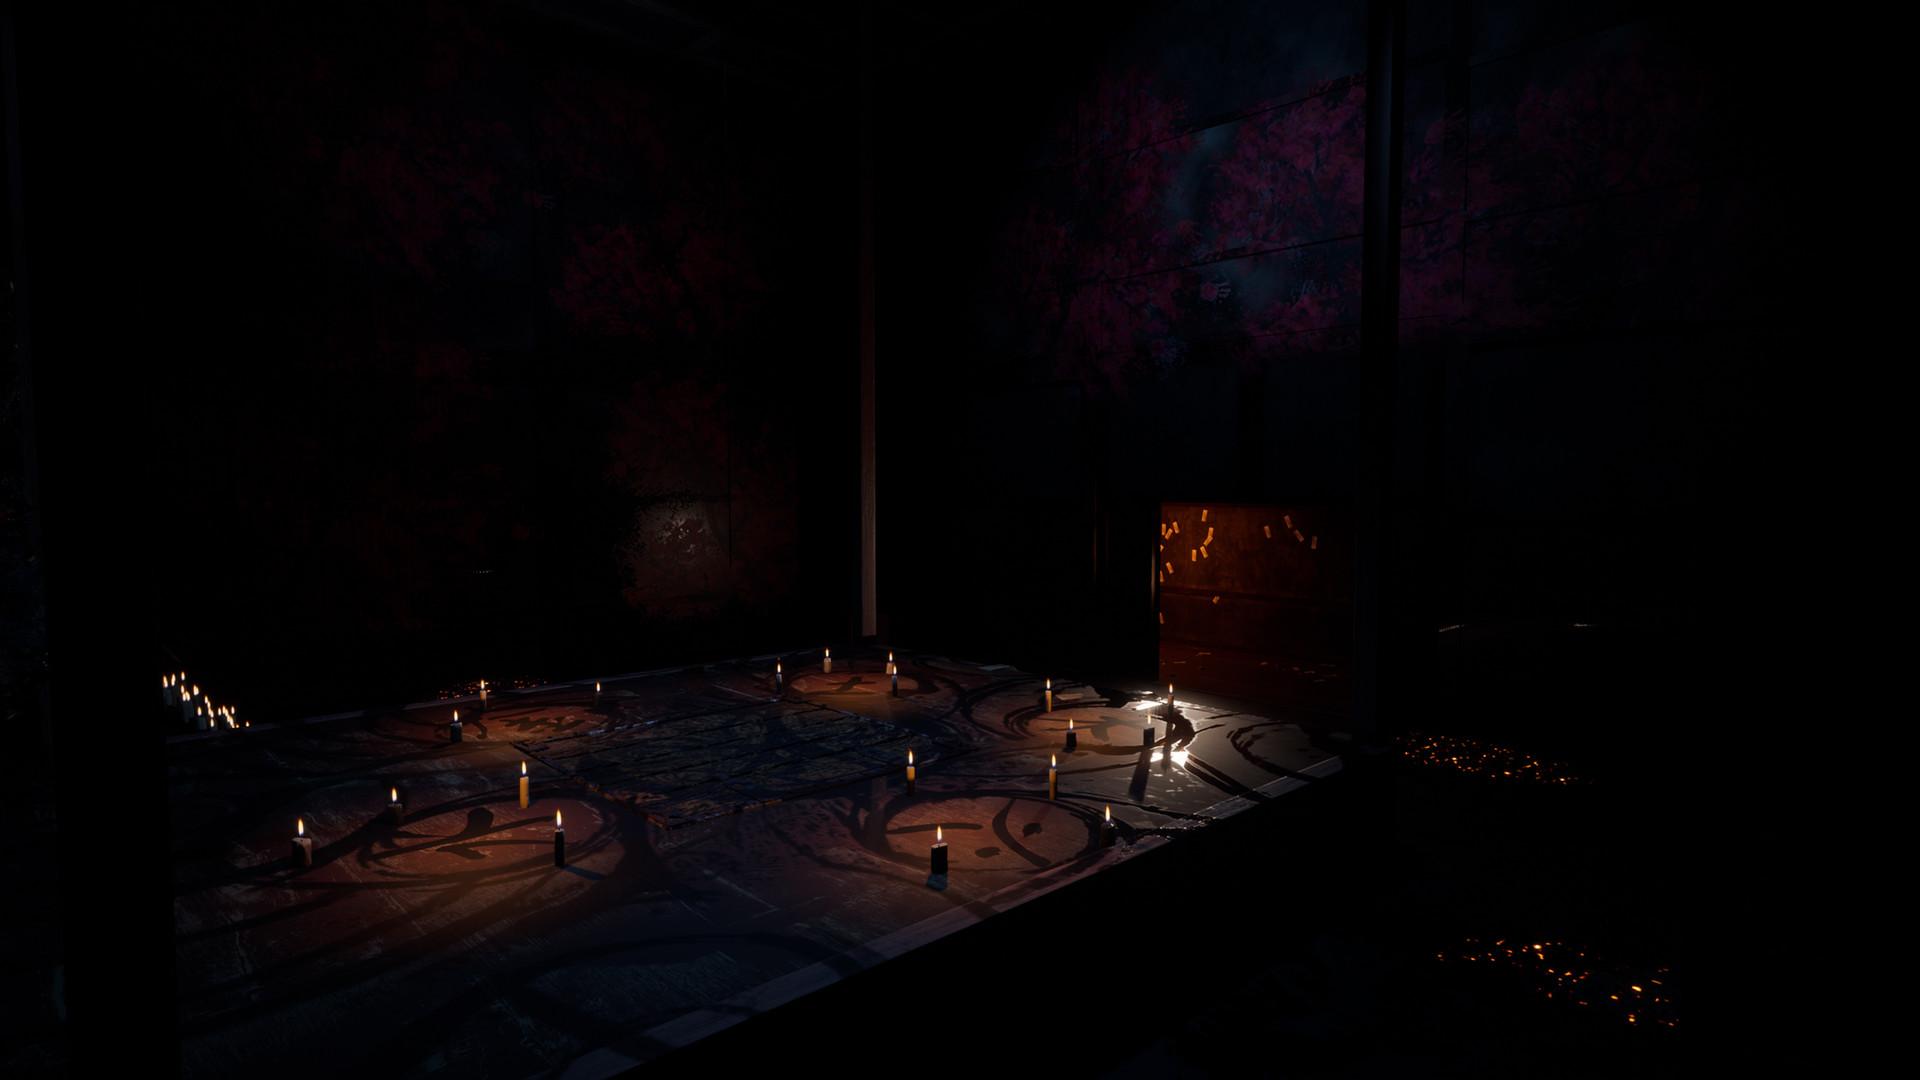 Screenshot №13 from game Malice